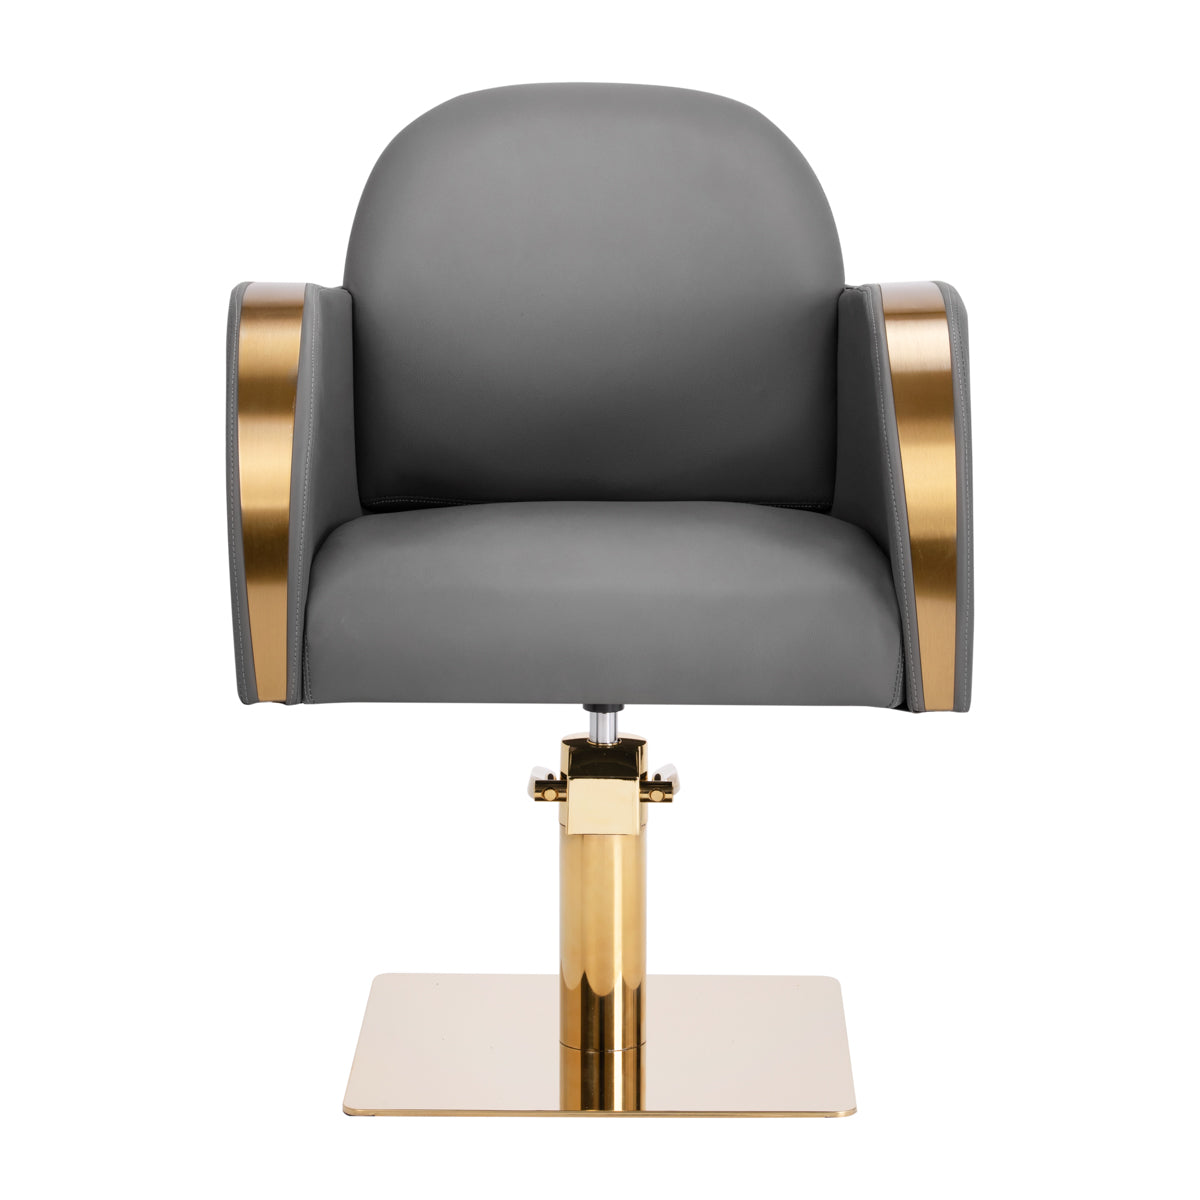 Gabbiano hairdressing chair Malaga gold grey